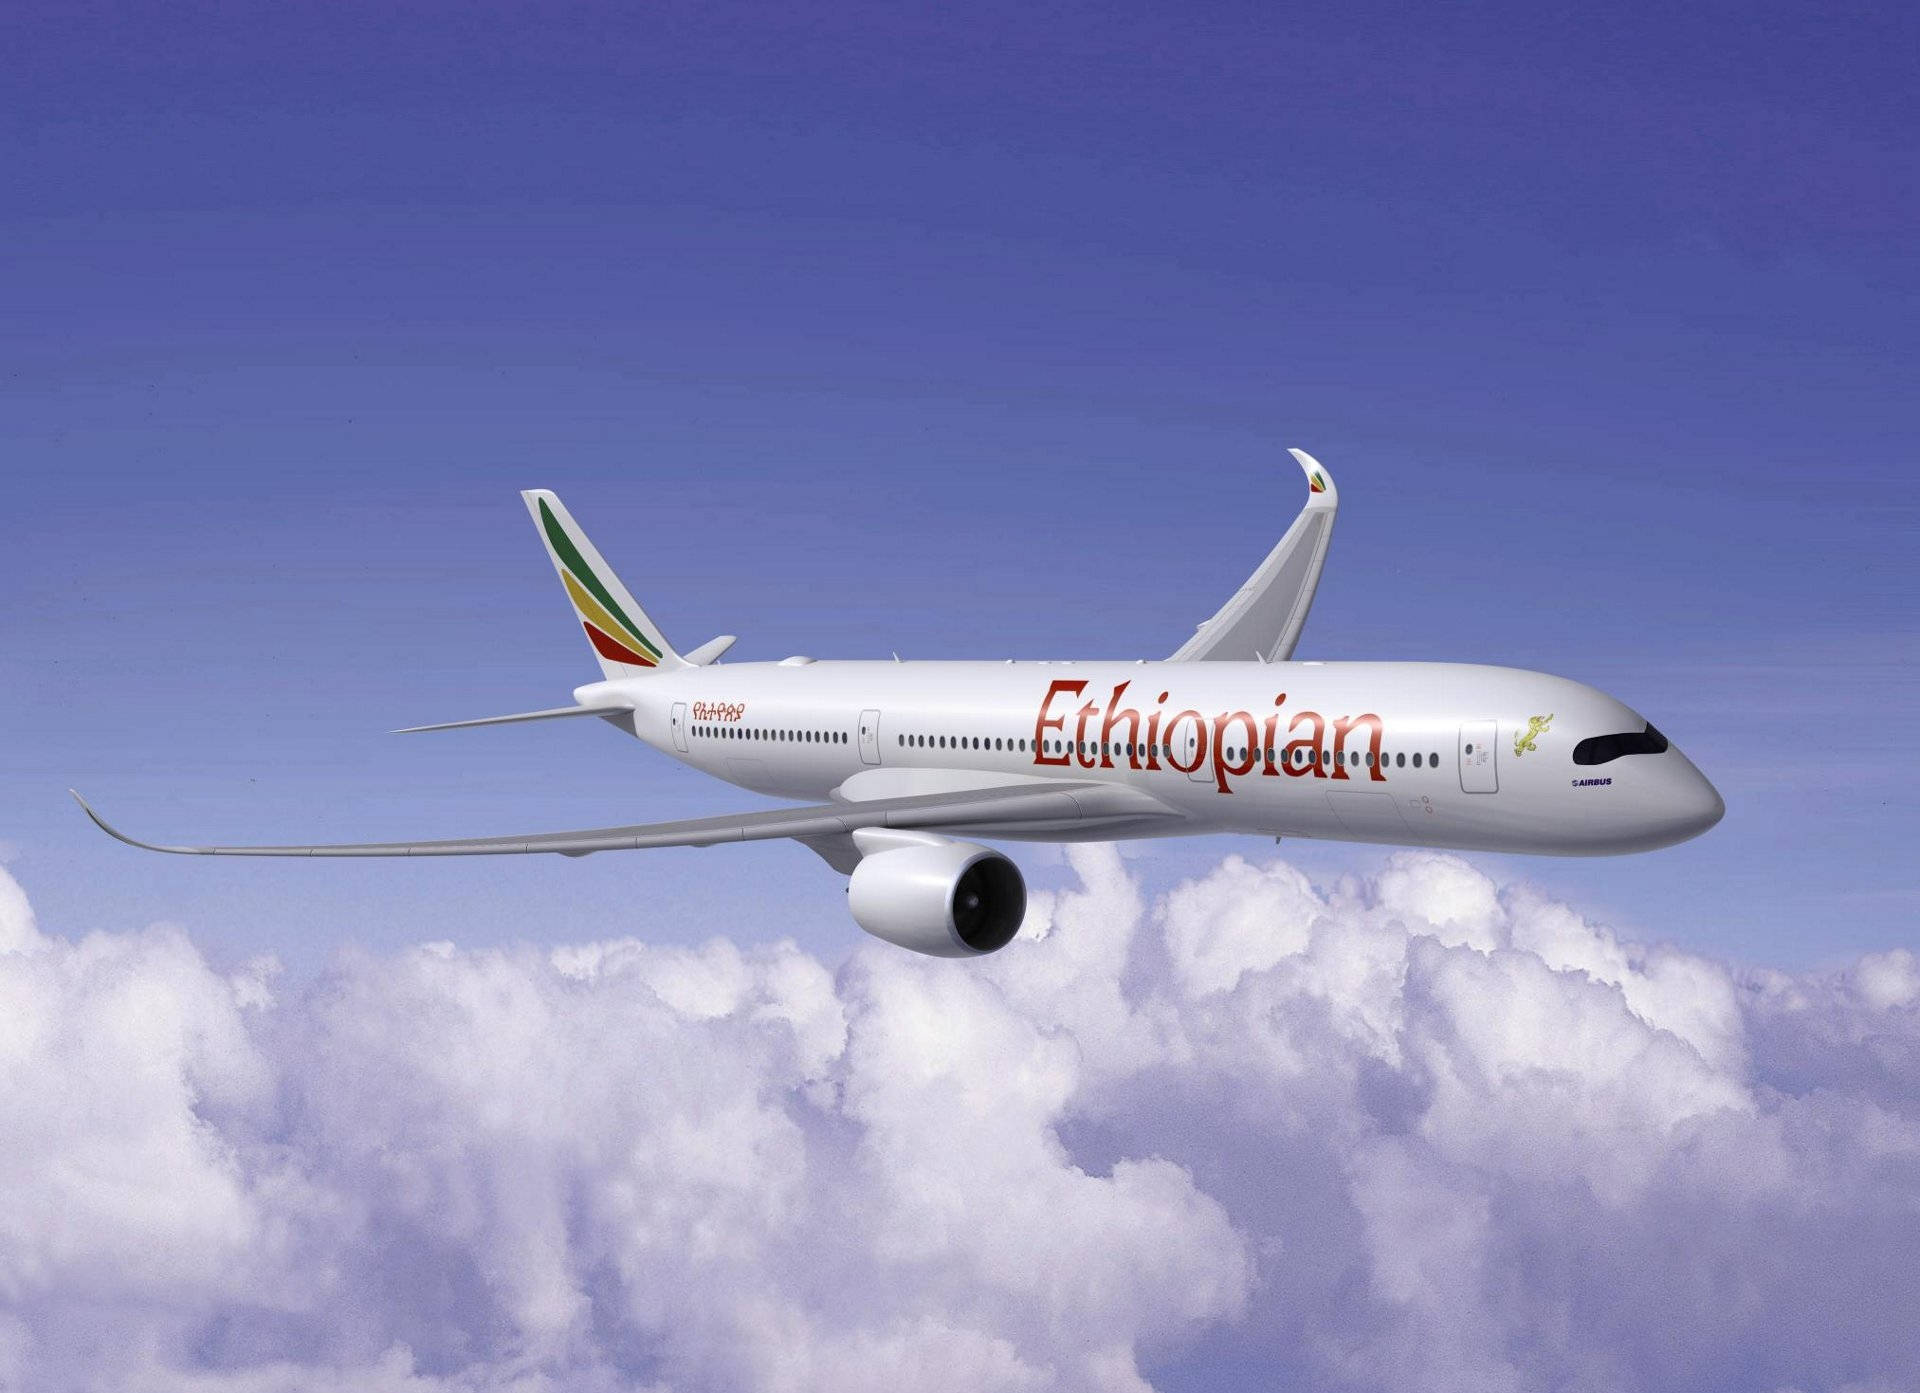 Gliding Ethiopian Airlines Plane Wallpaper